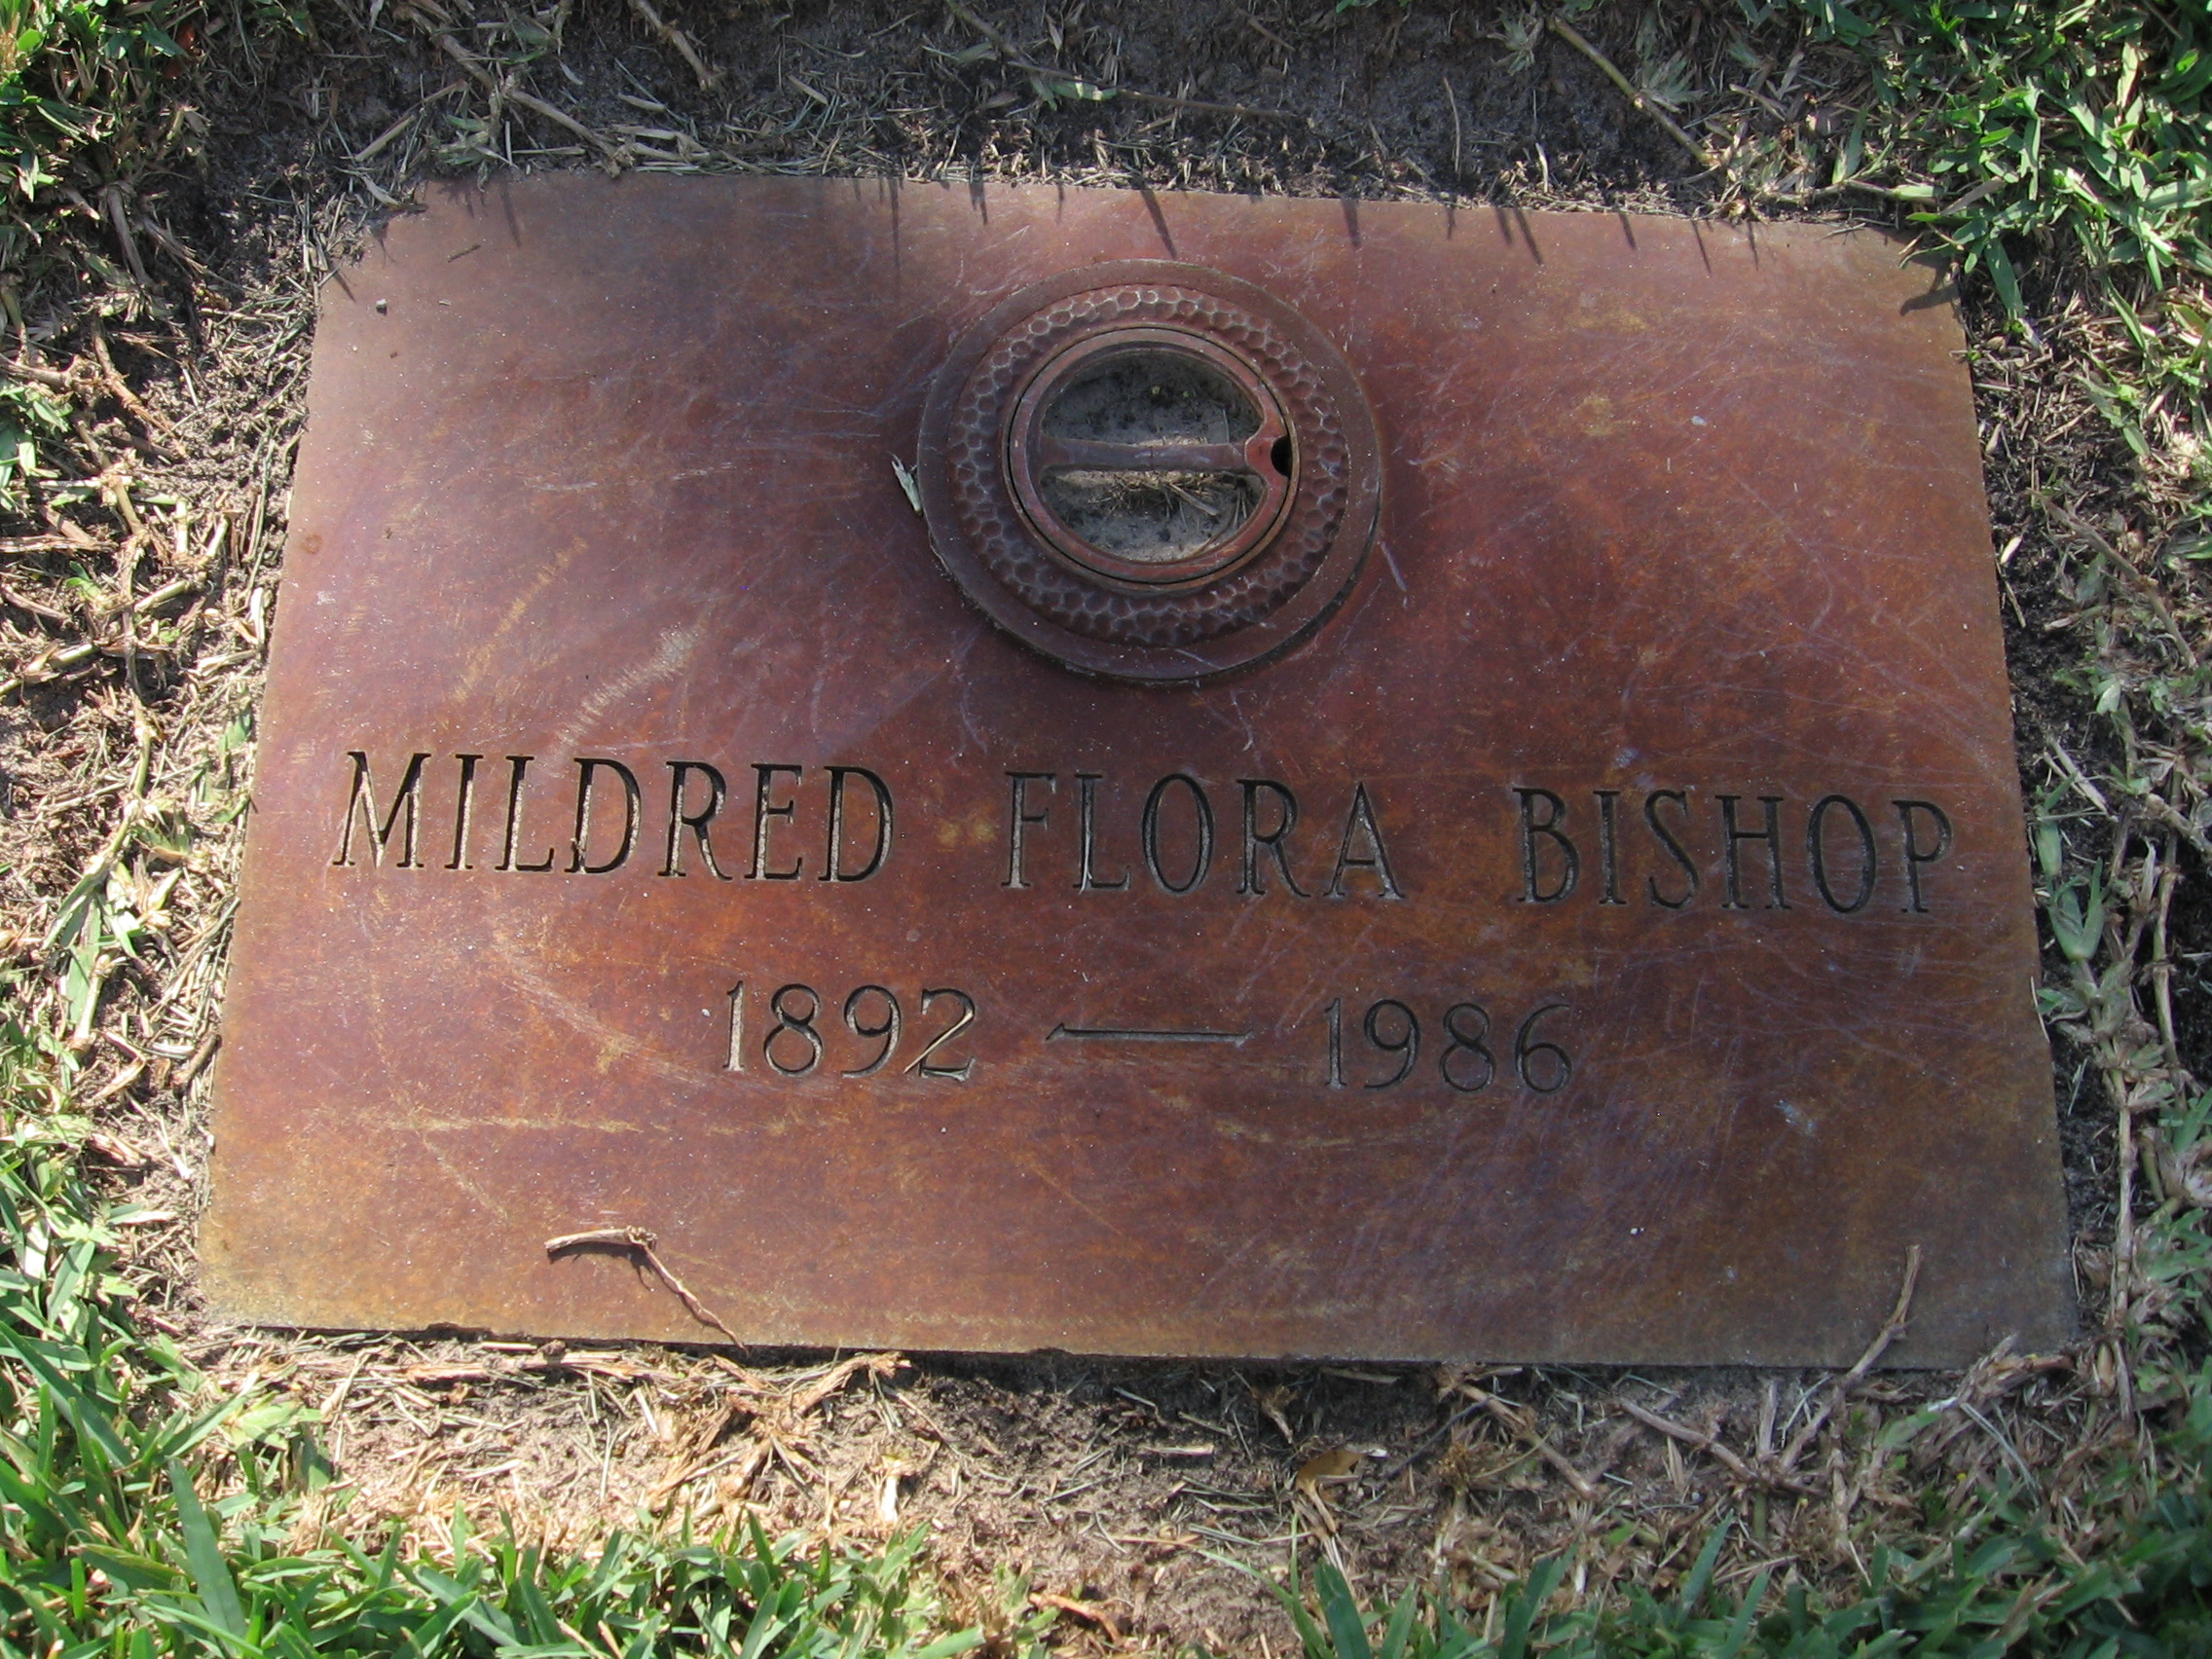 Mildred Flora Bishop